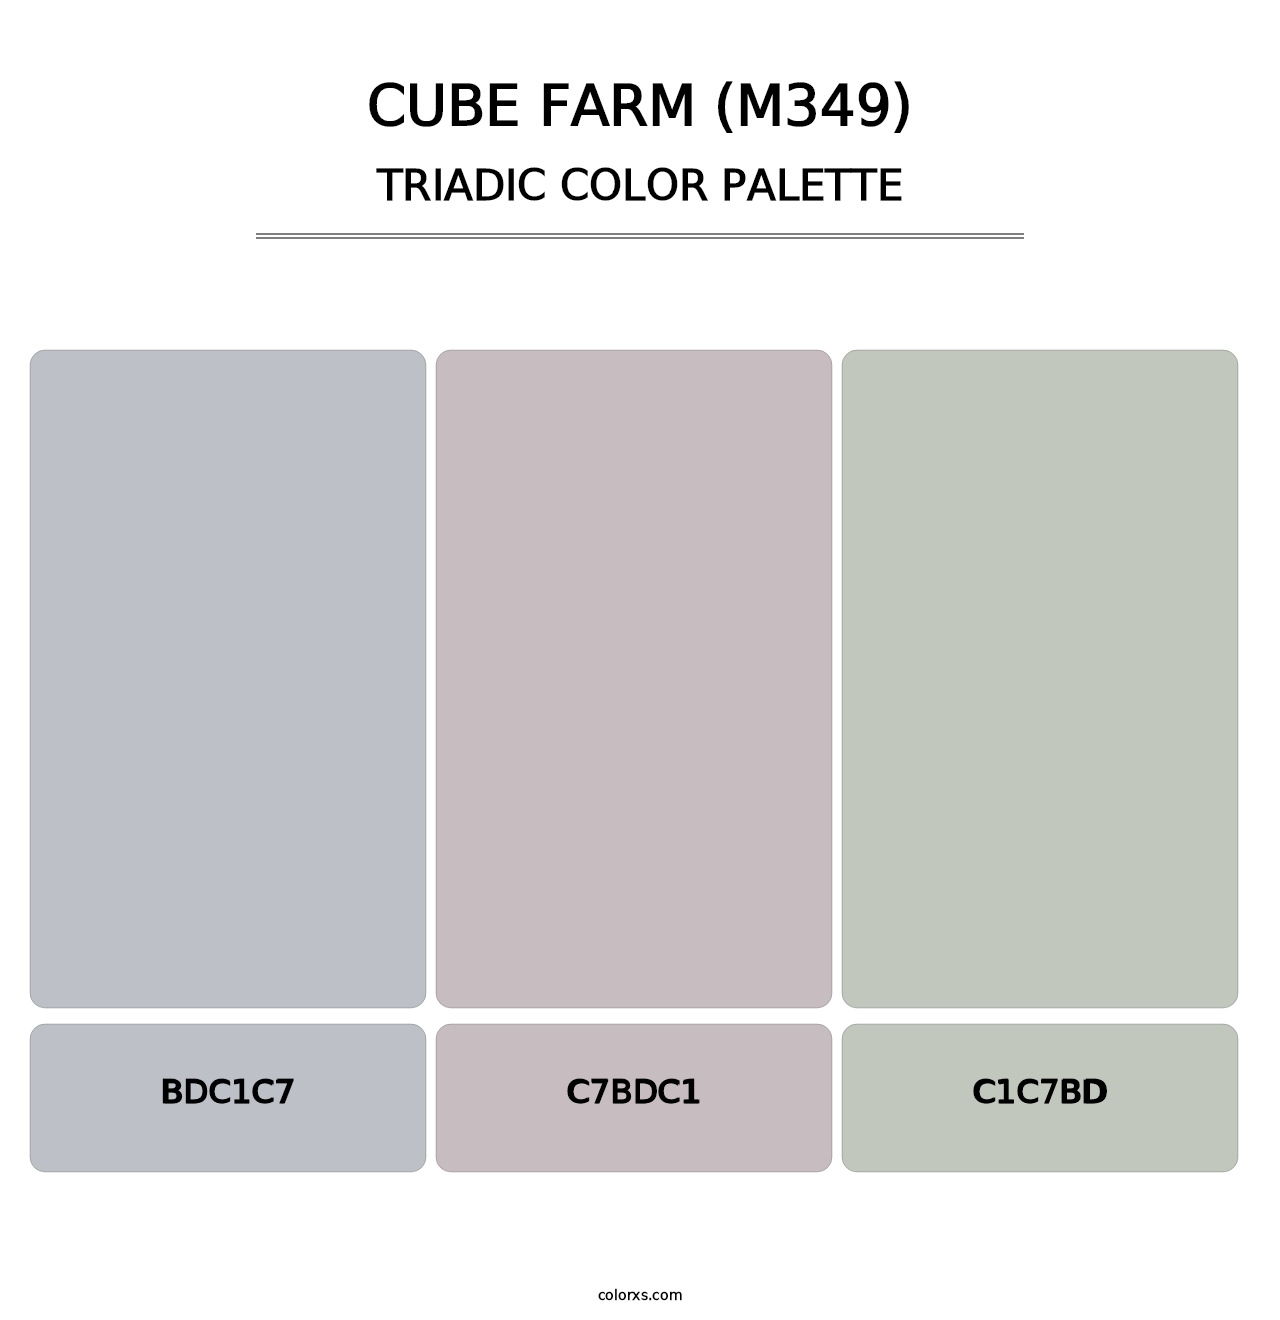 Cube Farm (M349) - Triadic Color Palette